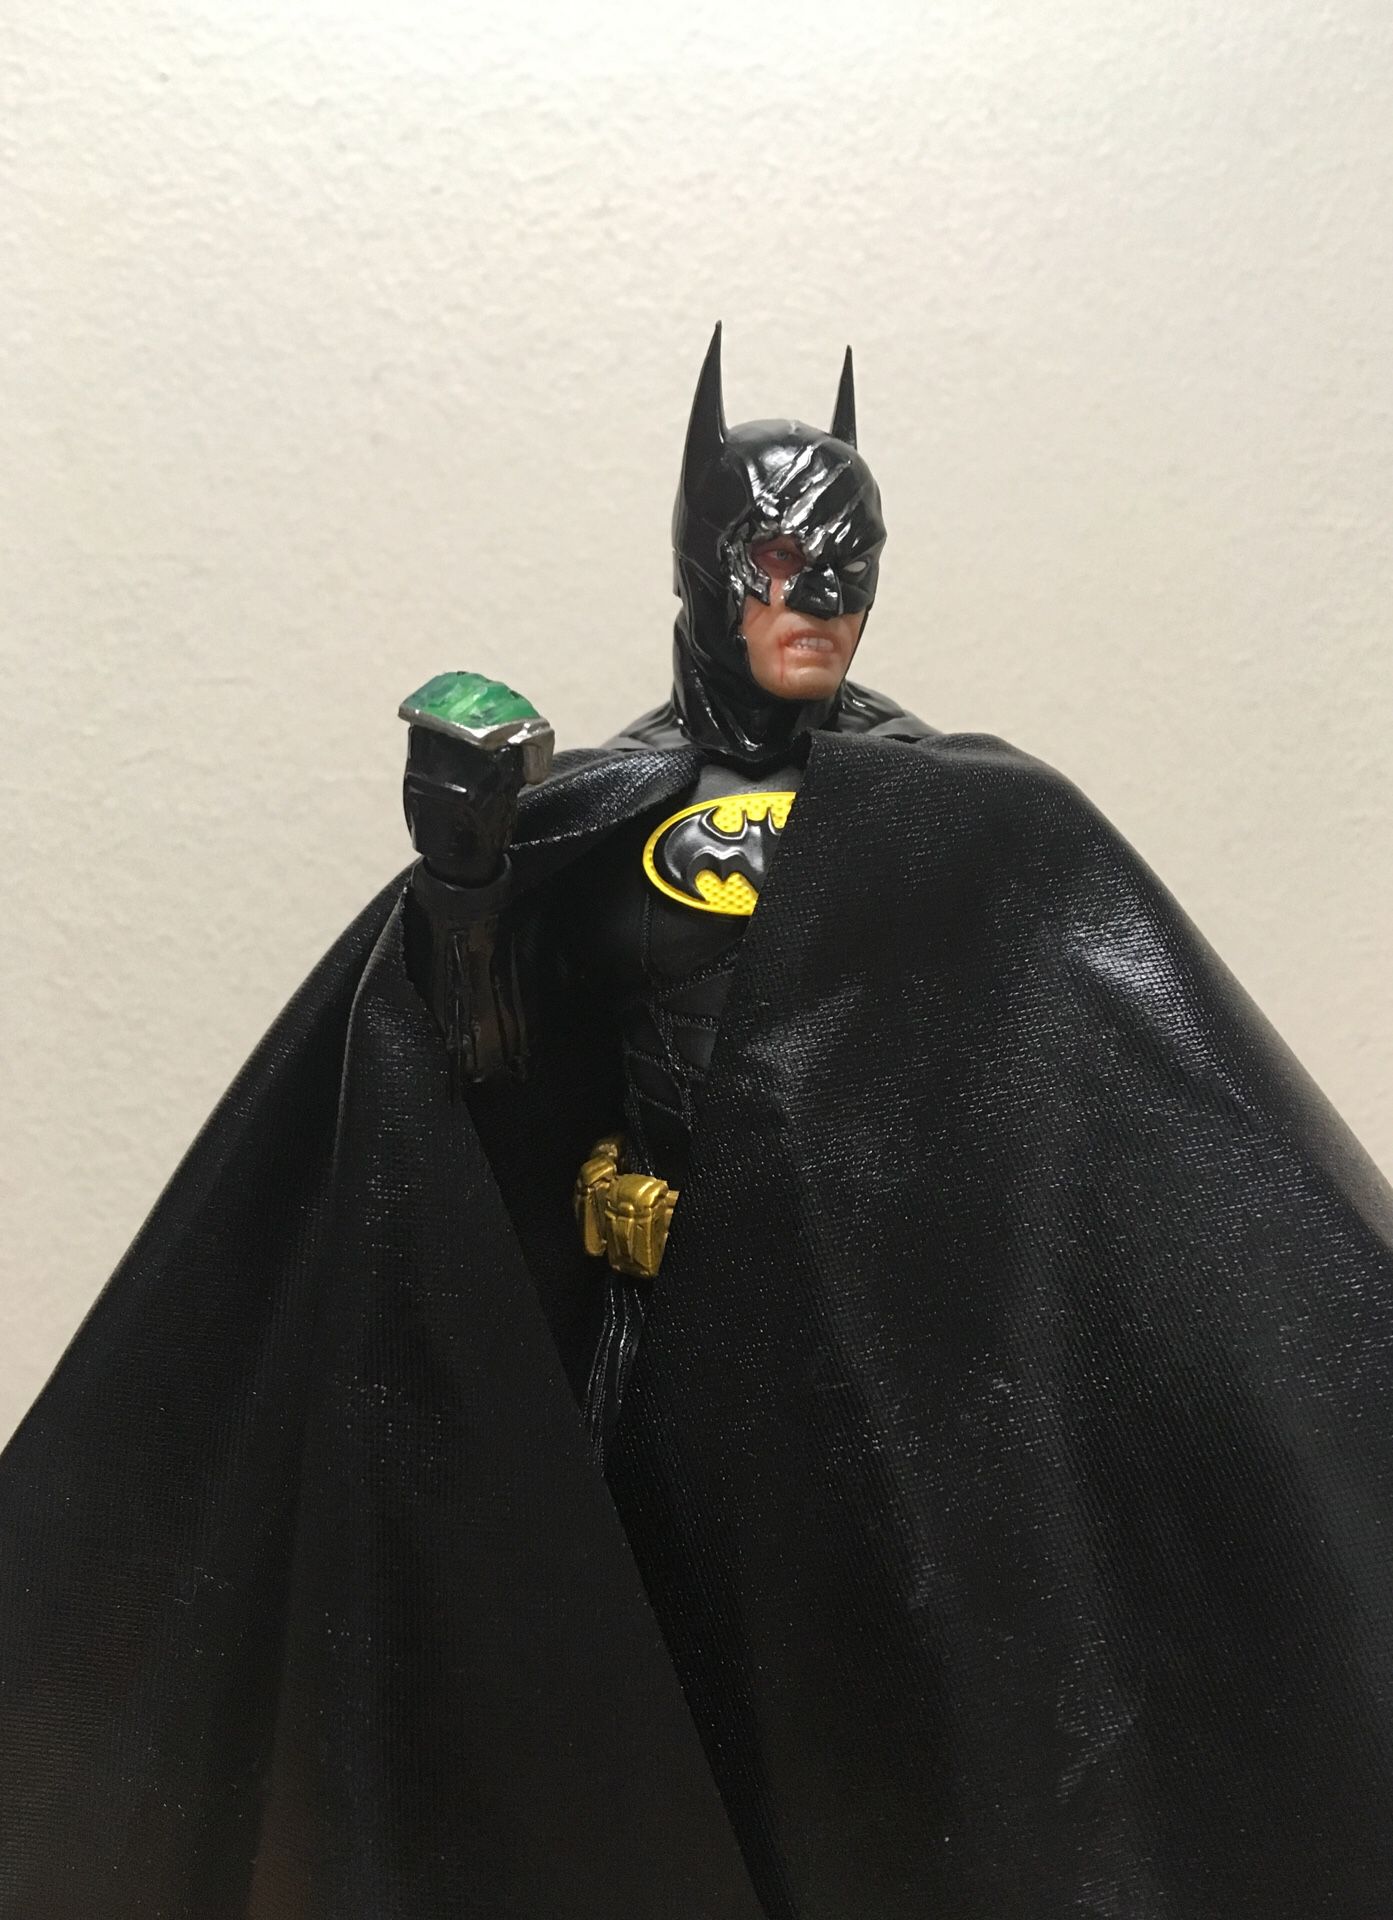 Mezco onyx batman for Sale in Fremont, CA - OfferUp